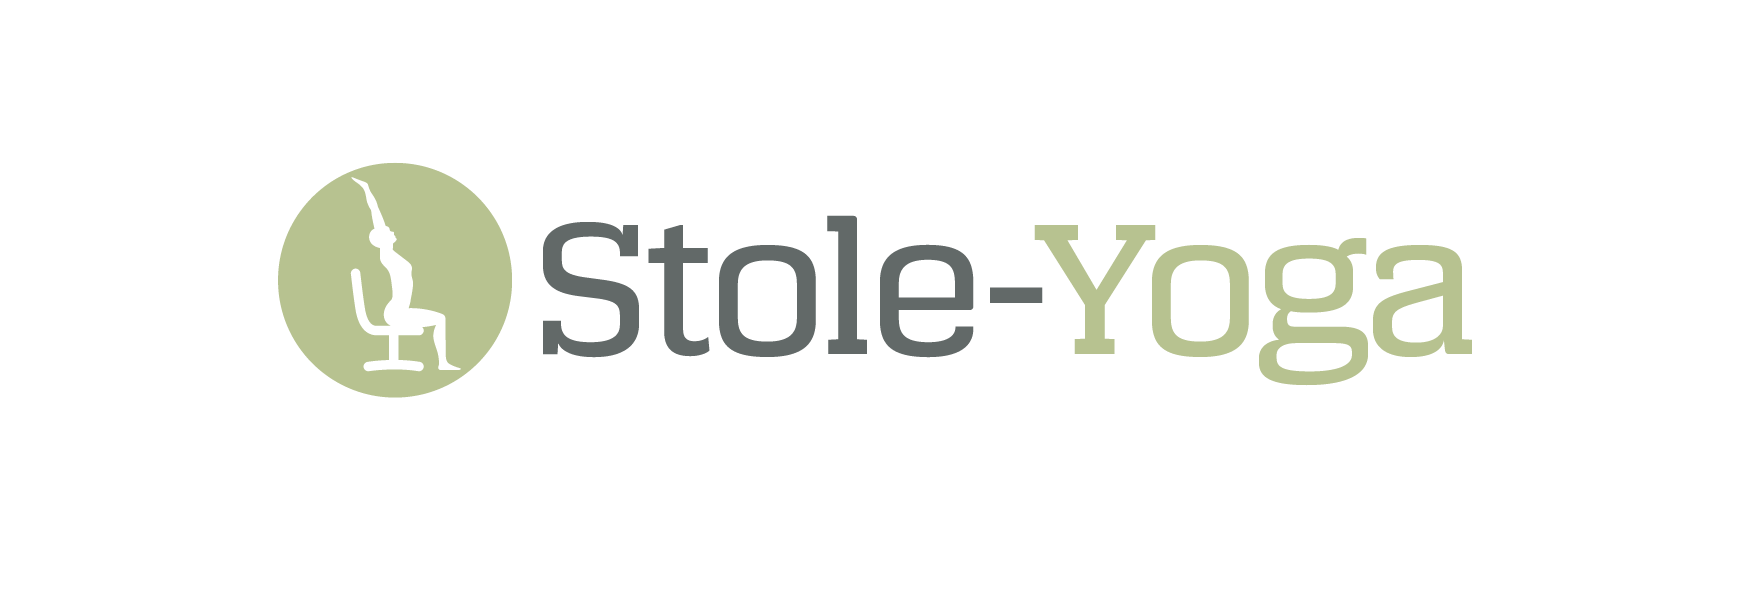 StoleYoga logo